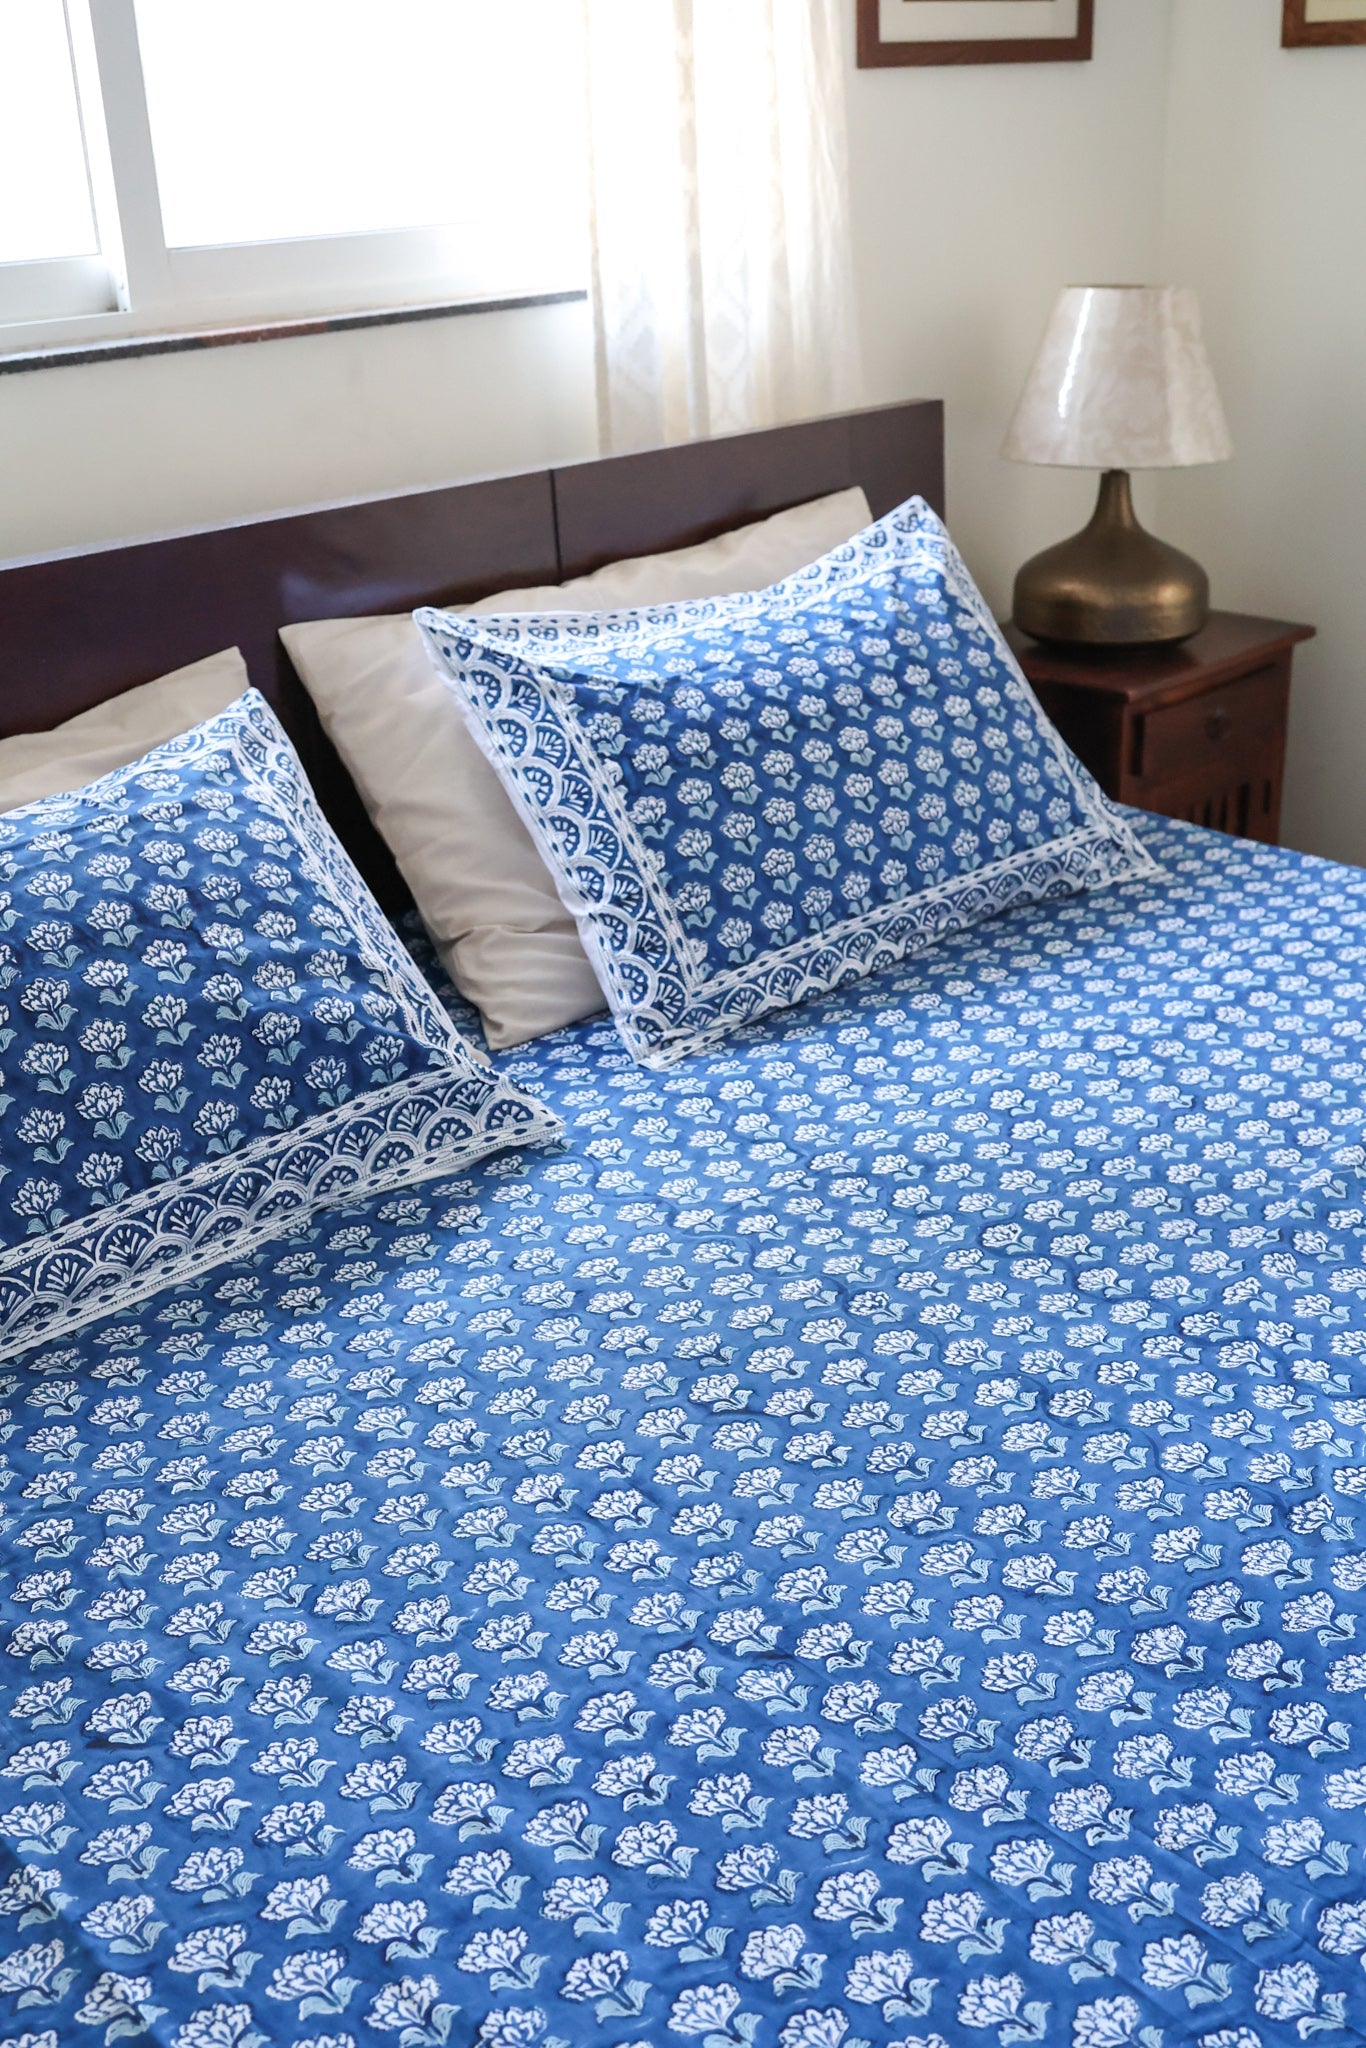 Block print bed sheet set - Blue floral bedsheet set- King size -108x108 inches - King bedsheet set